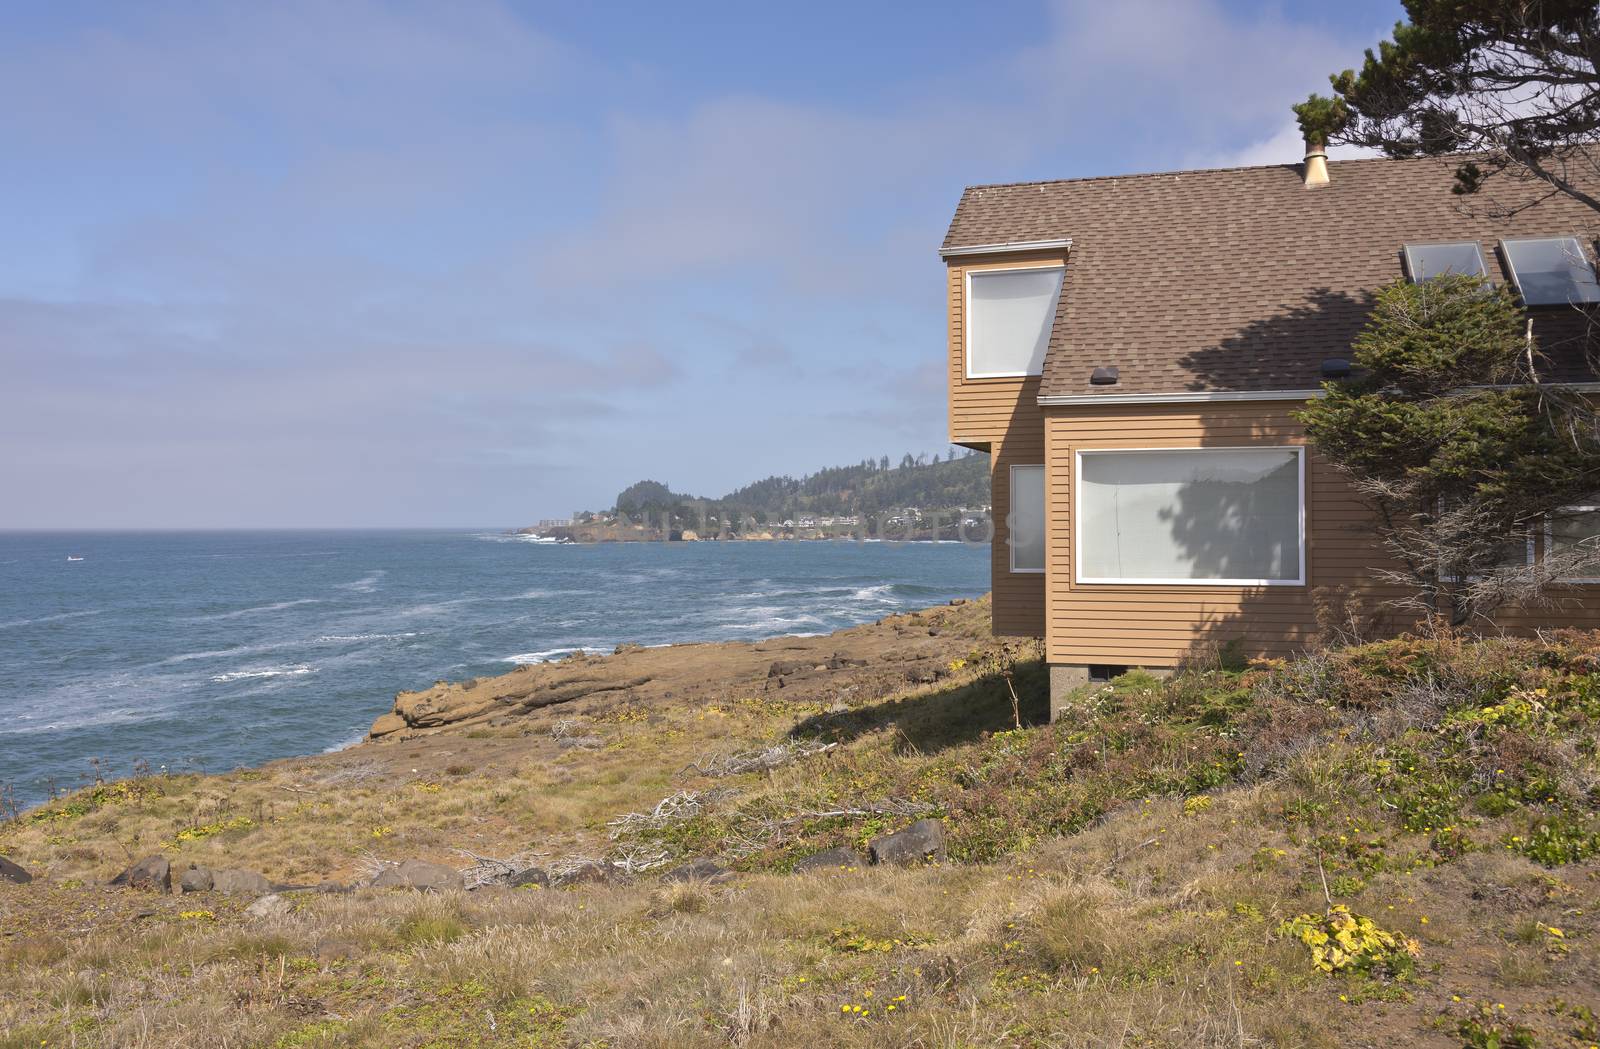 Oregon coast real estate and landscape. by Rigucci